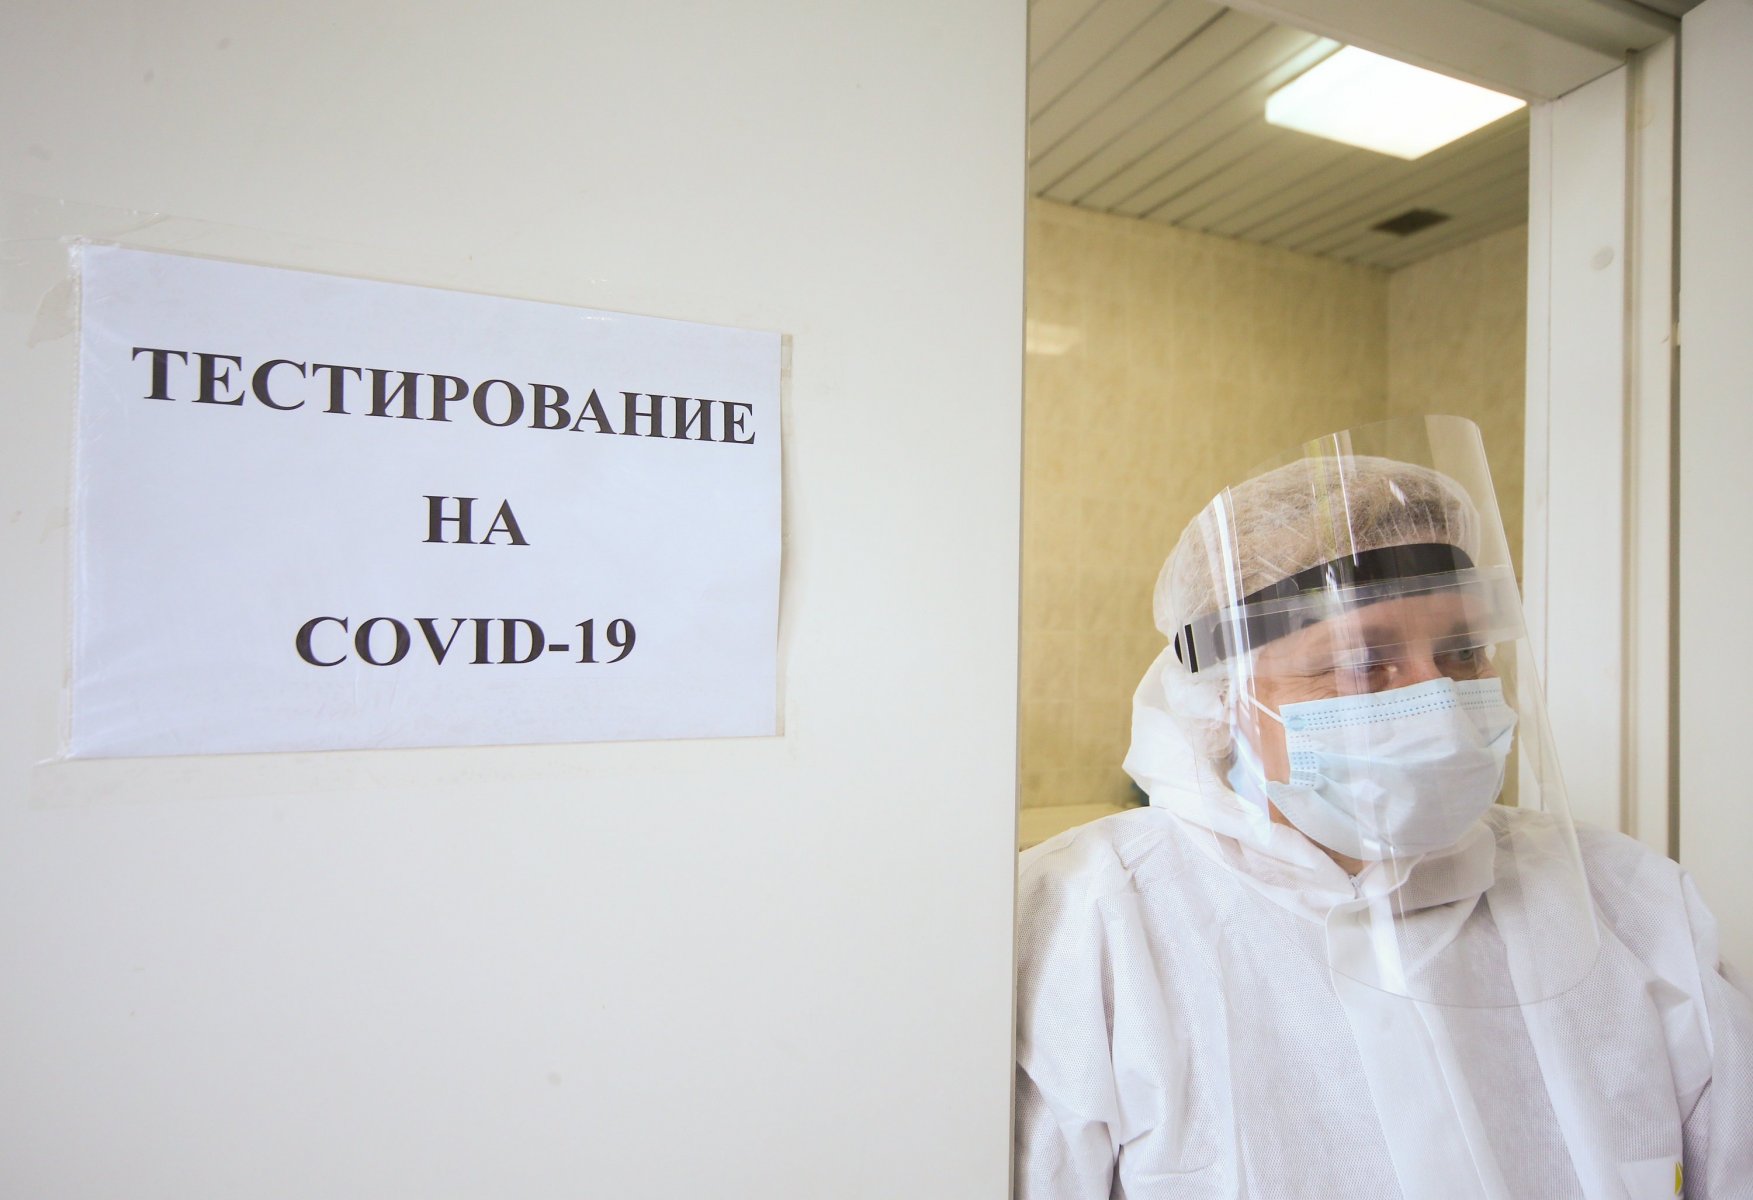 А аэропорту Домодедово запущено экспресс-тестирование на коронавирус